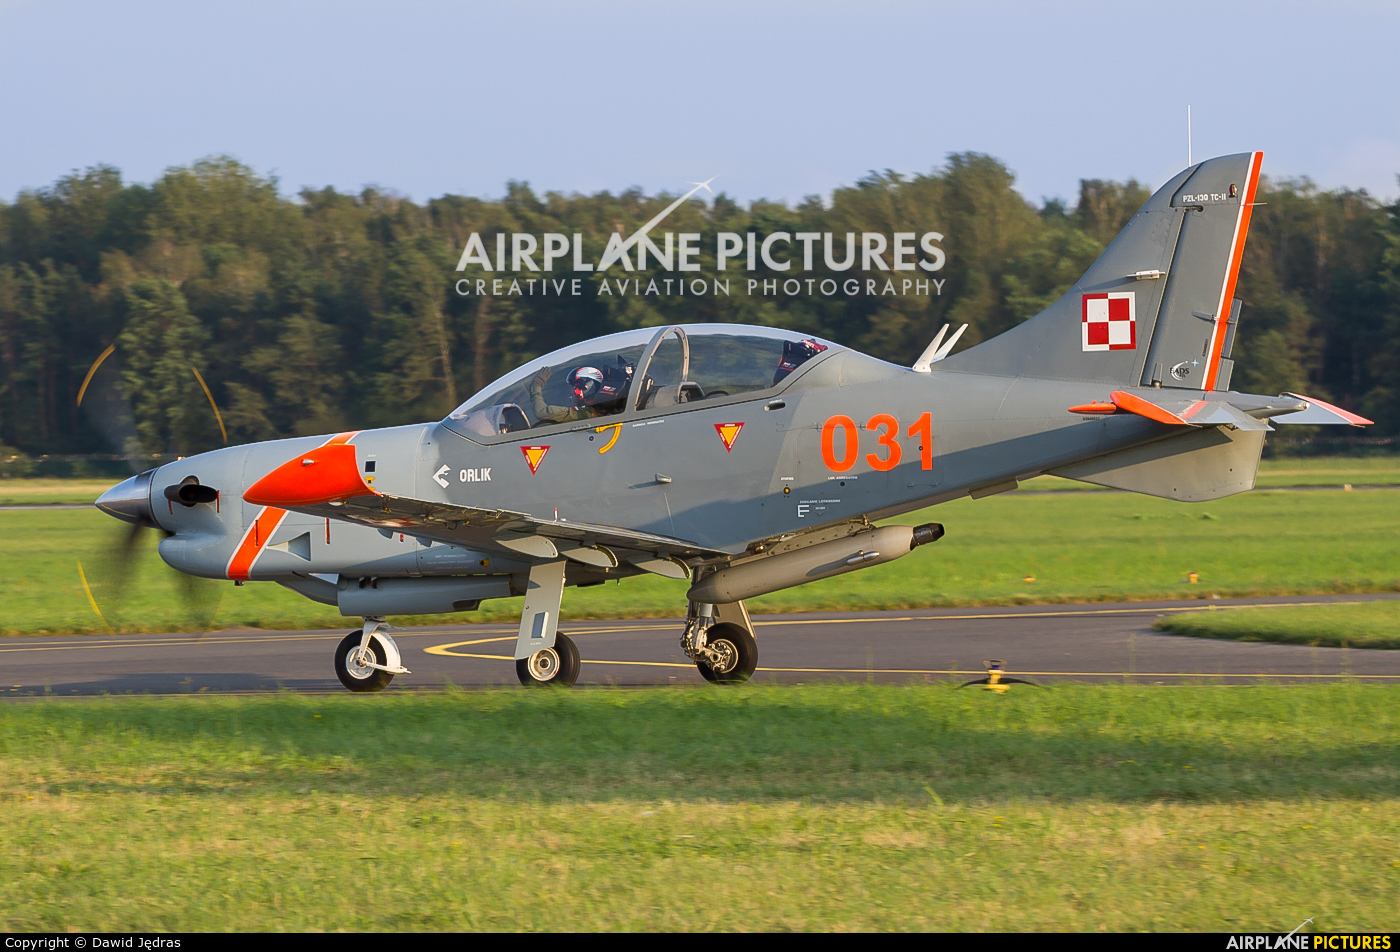 Poland - Air Force "Orlik Acrobatic Group" 031 aircraft at Radom - Sadków